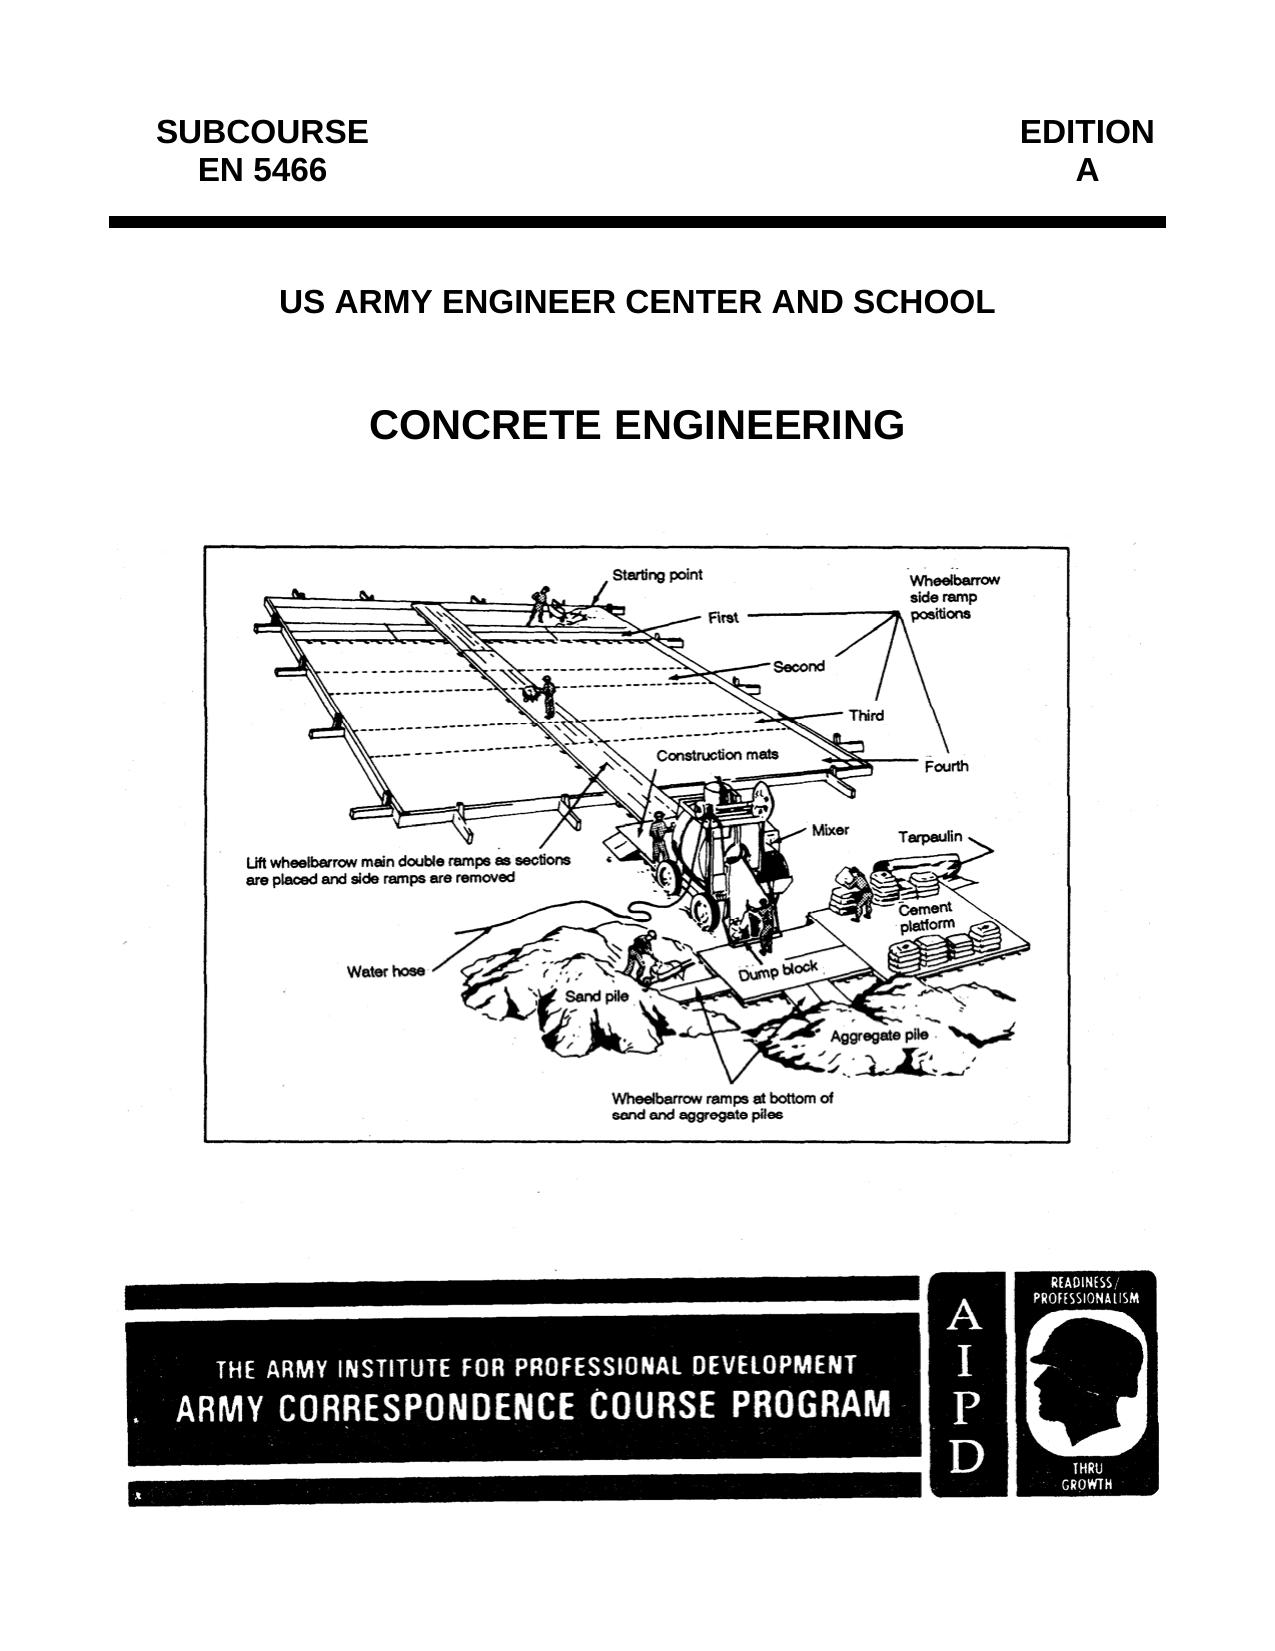 Microsoft Word - Concrete Engineering - EN5466A.doc